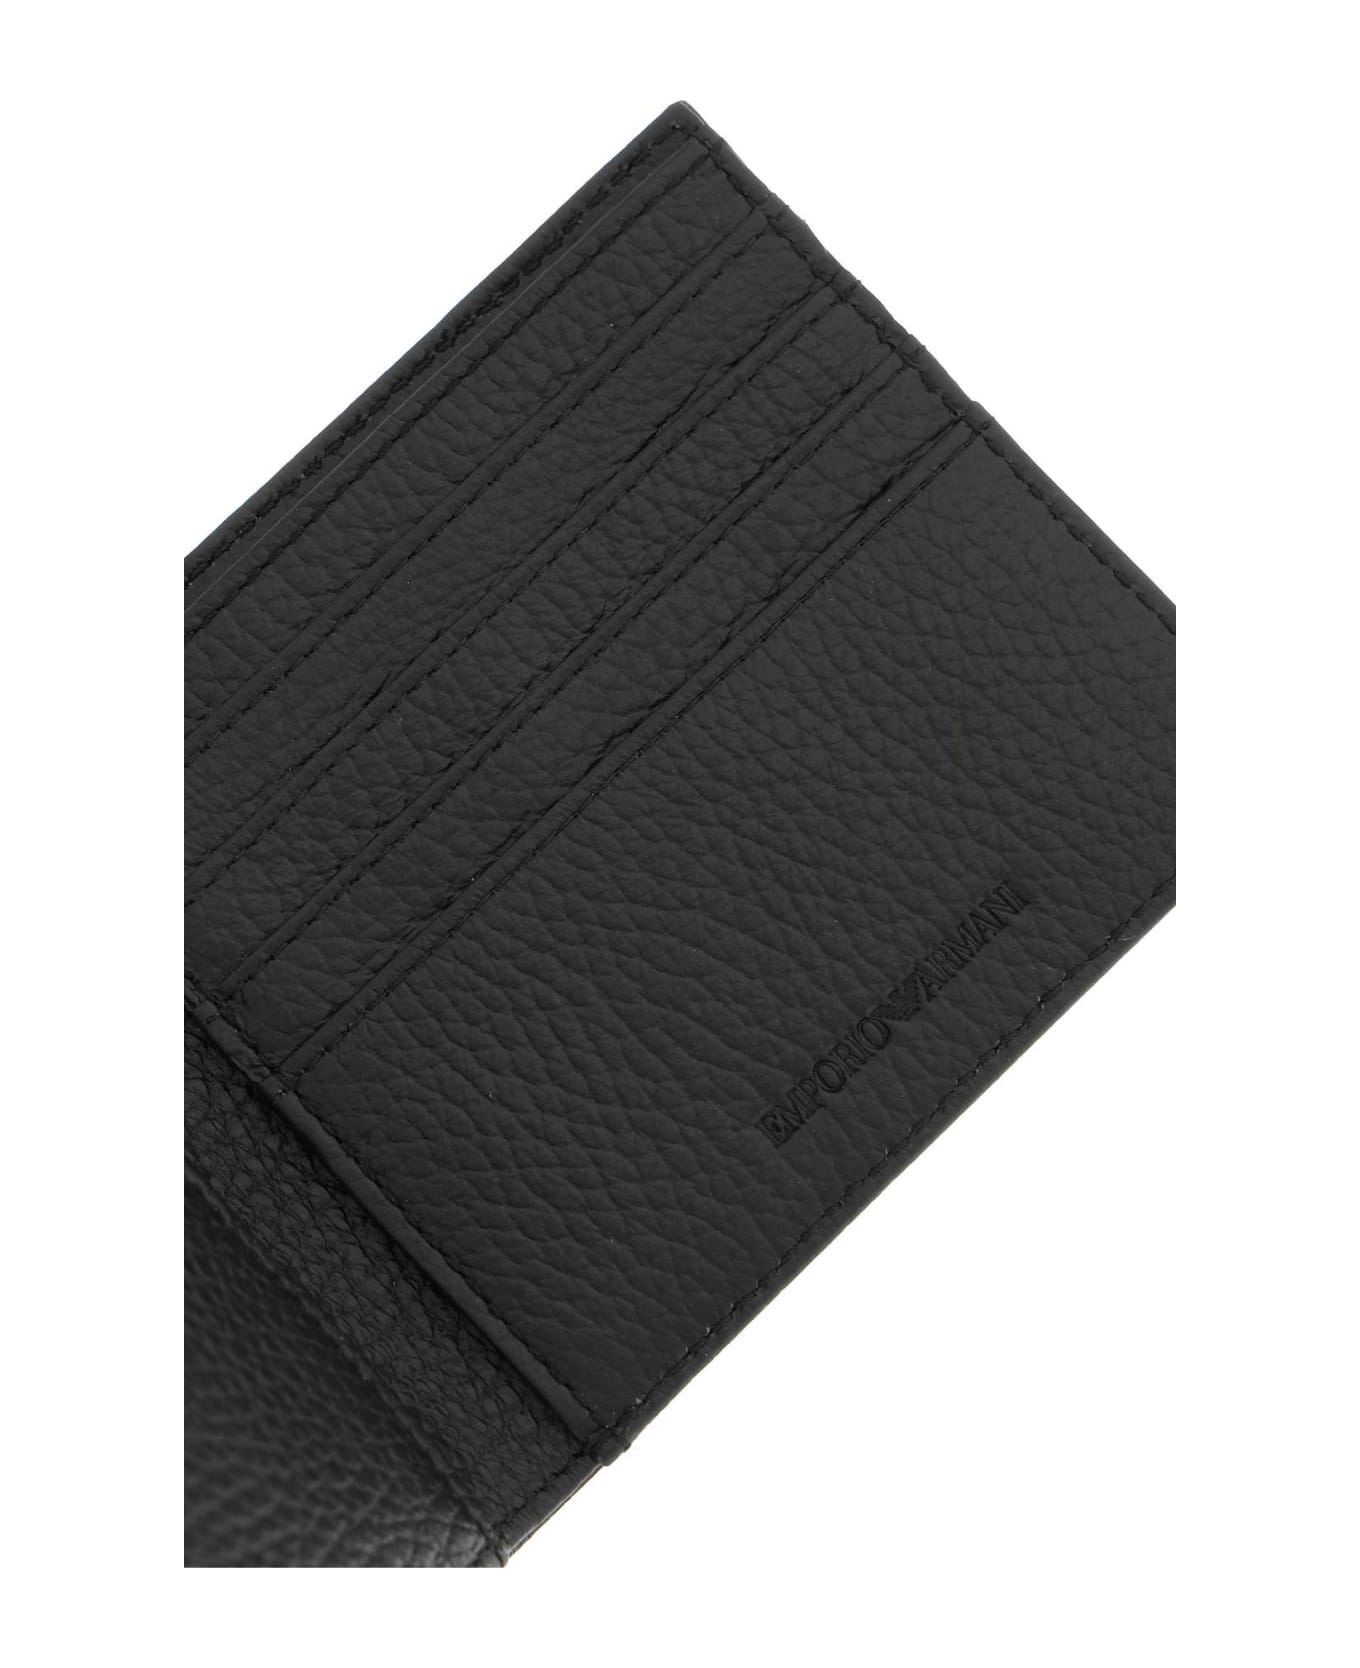 Emporio Armani Grained Leather Wallet - NERO (Black) 財布